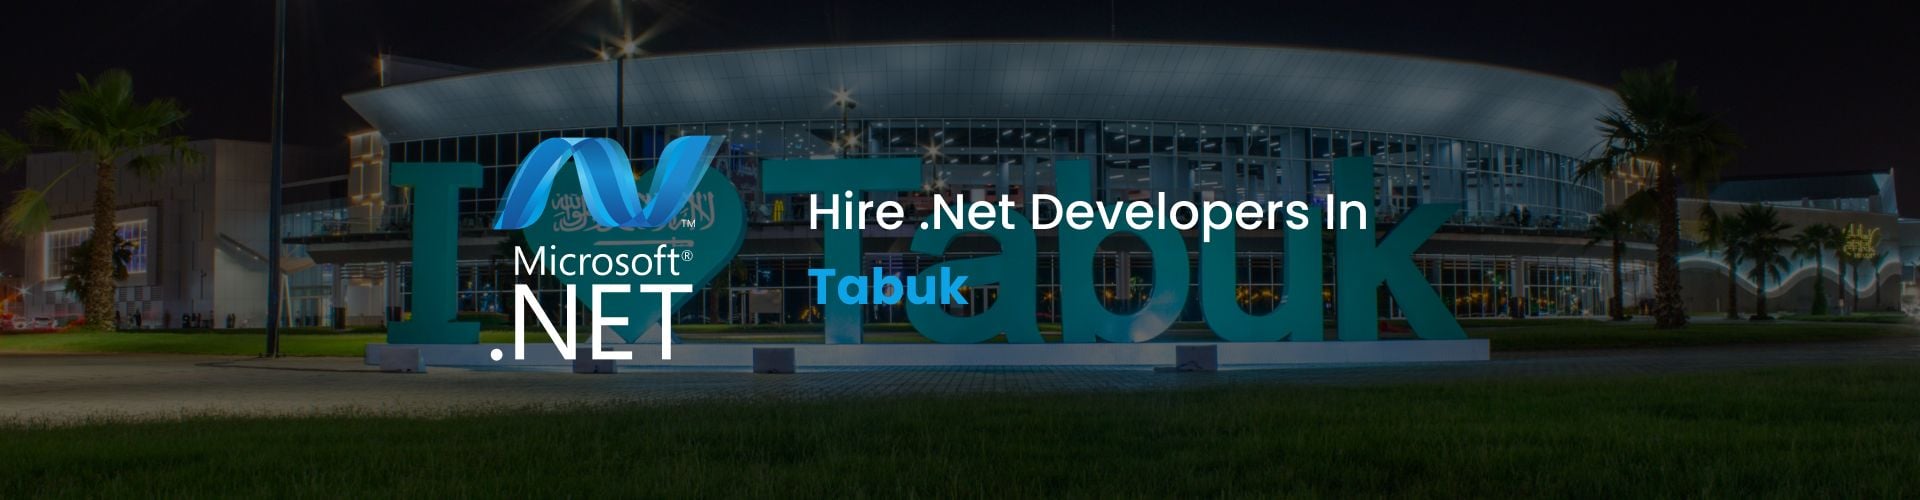 hire .net developers in tabuk